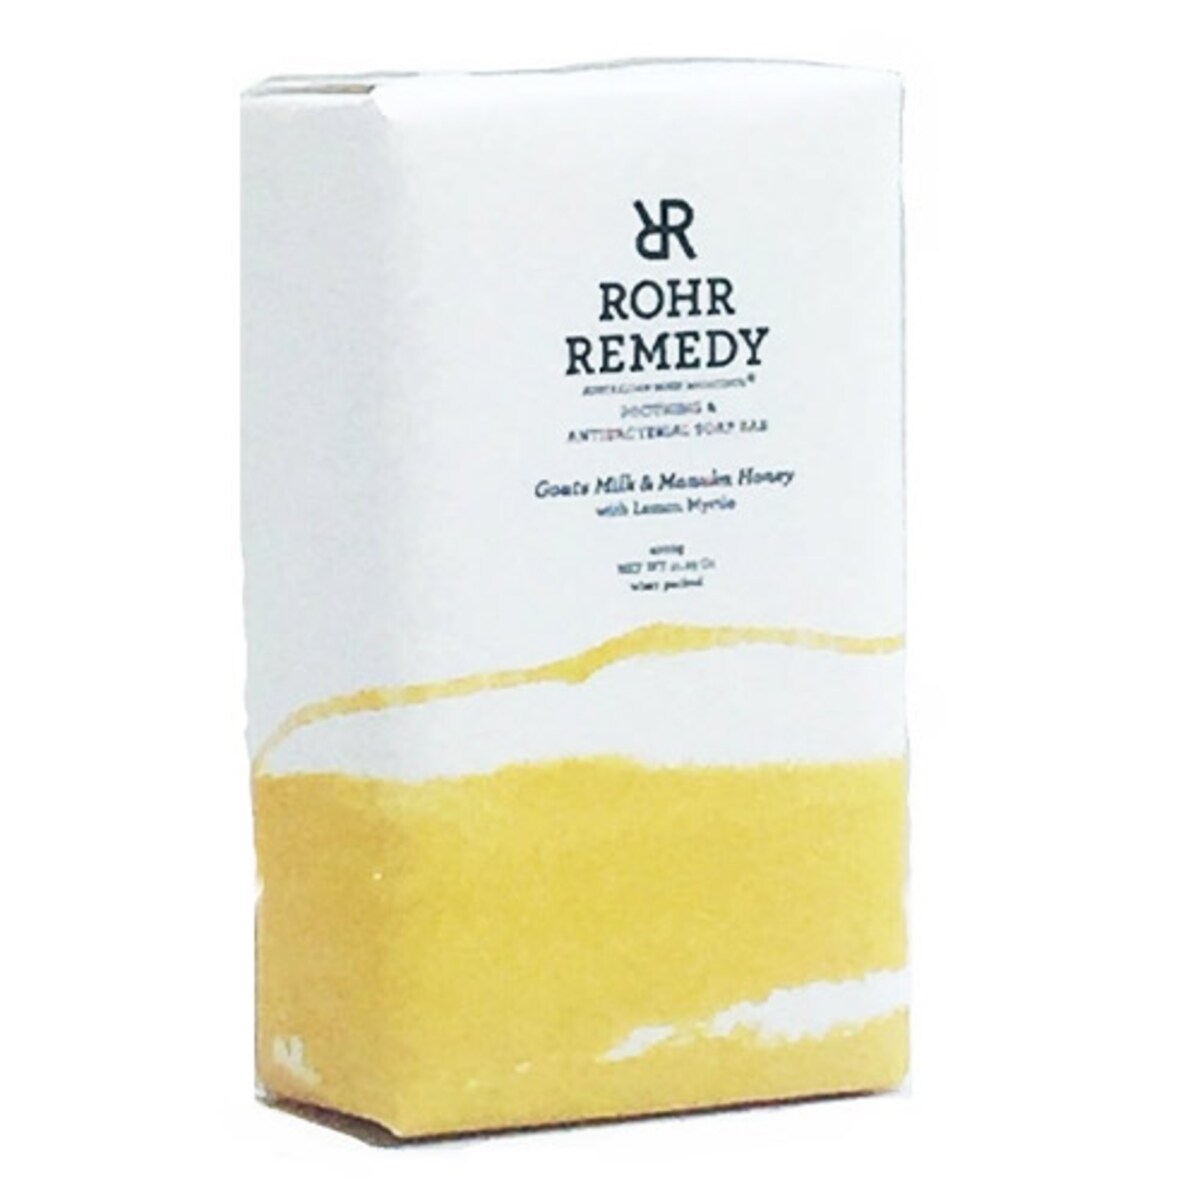 Rohr Remedy Goats Milk & Manuka Honey Soap Bar 200g